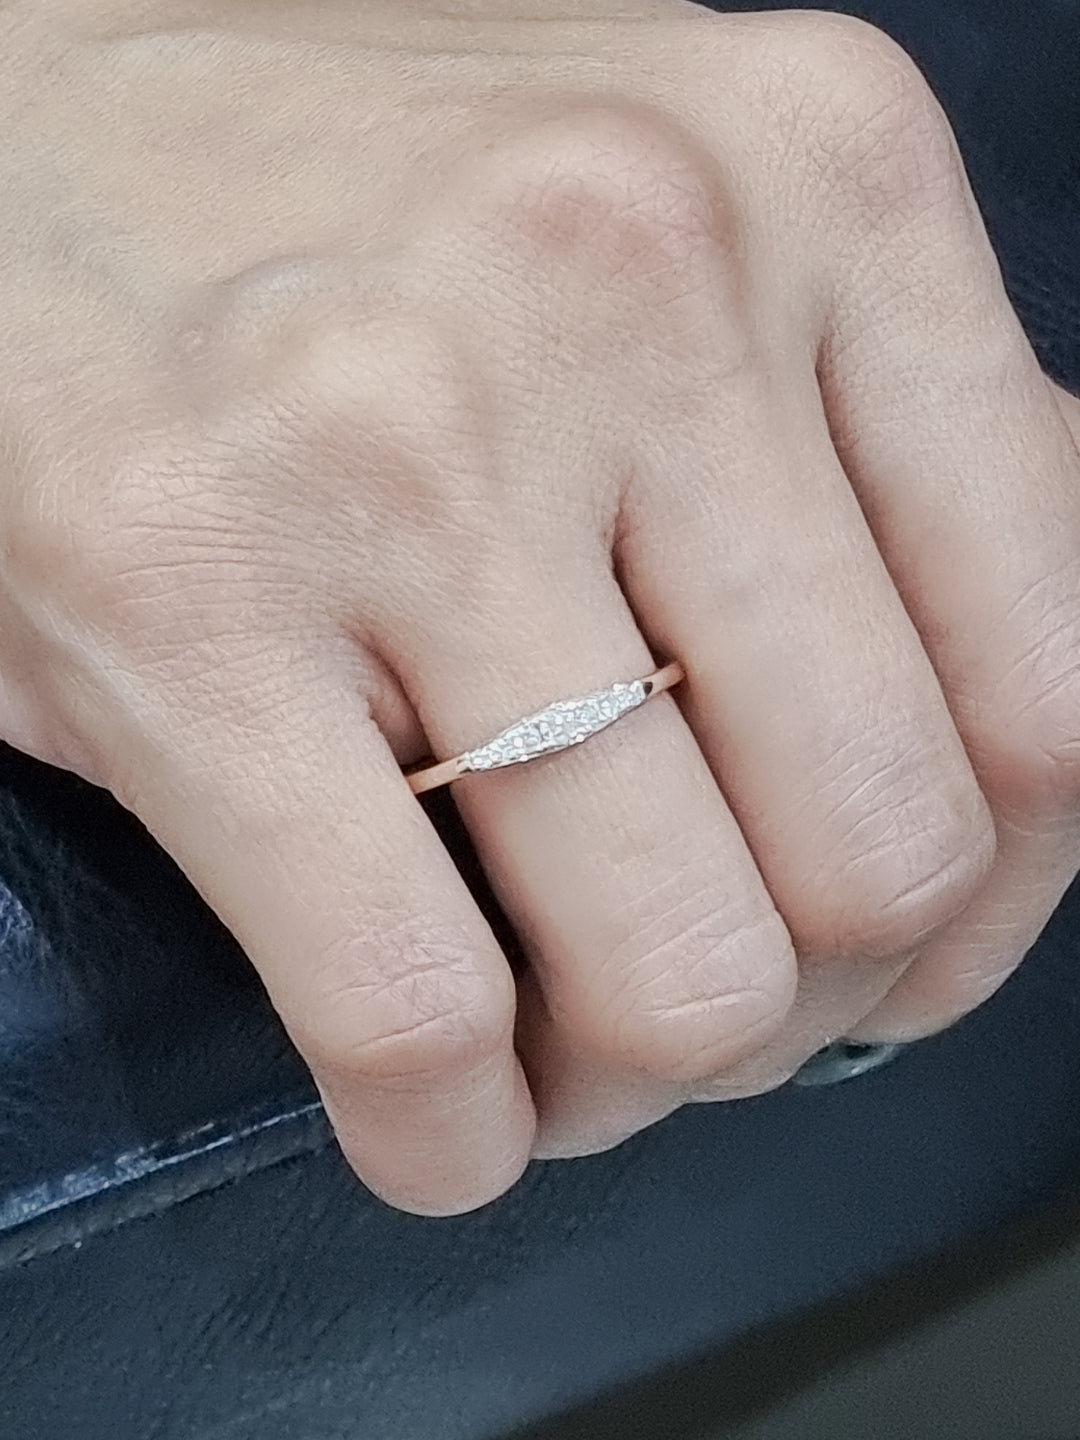 Petite Diamond Ring In 18k Rose Gold.